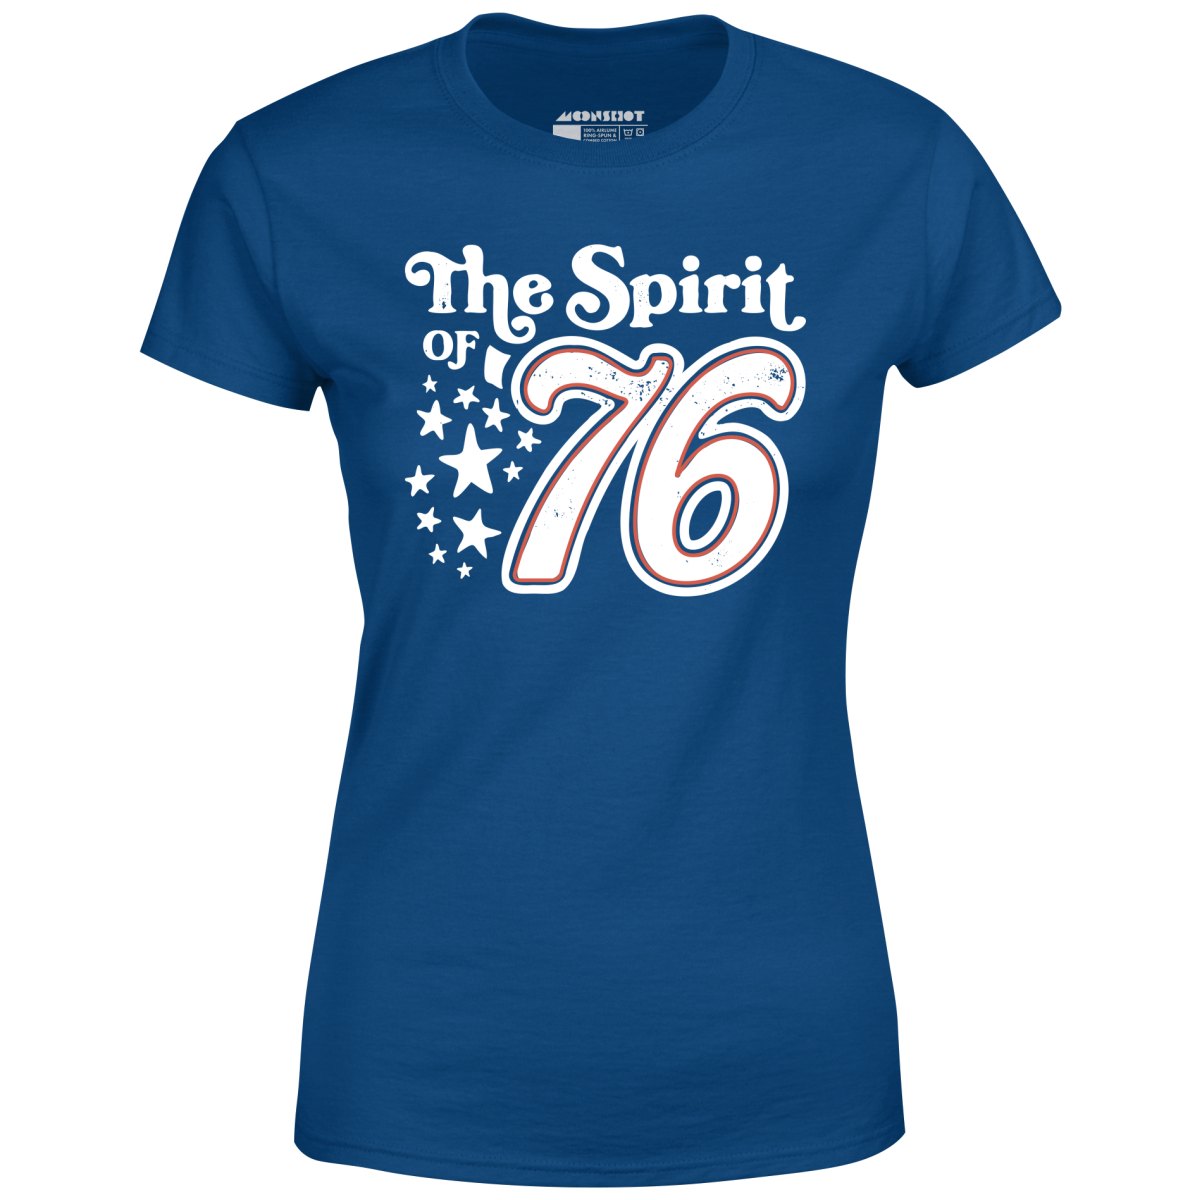 The Spirit of '76 - Women's T-Shirt